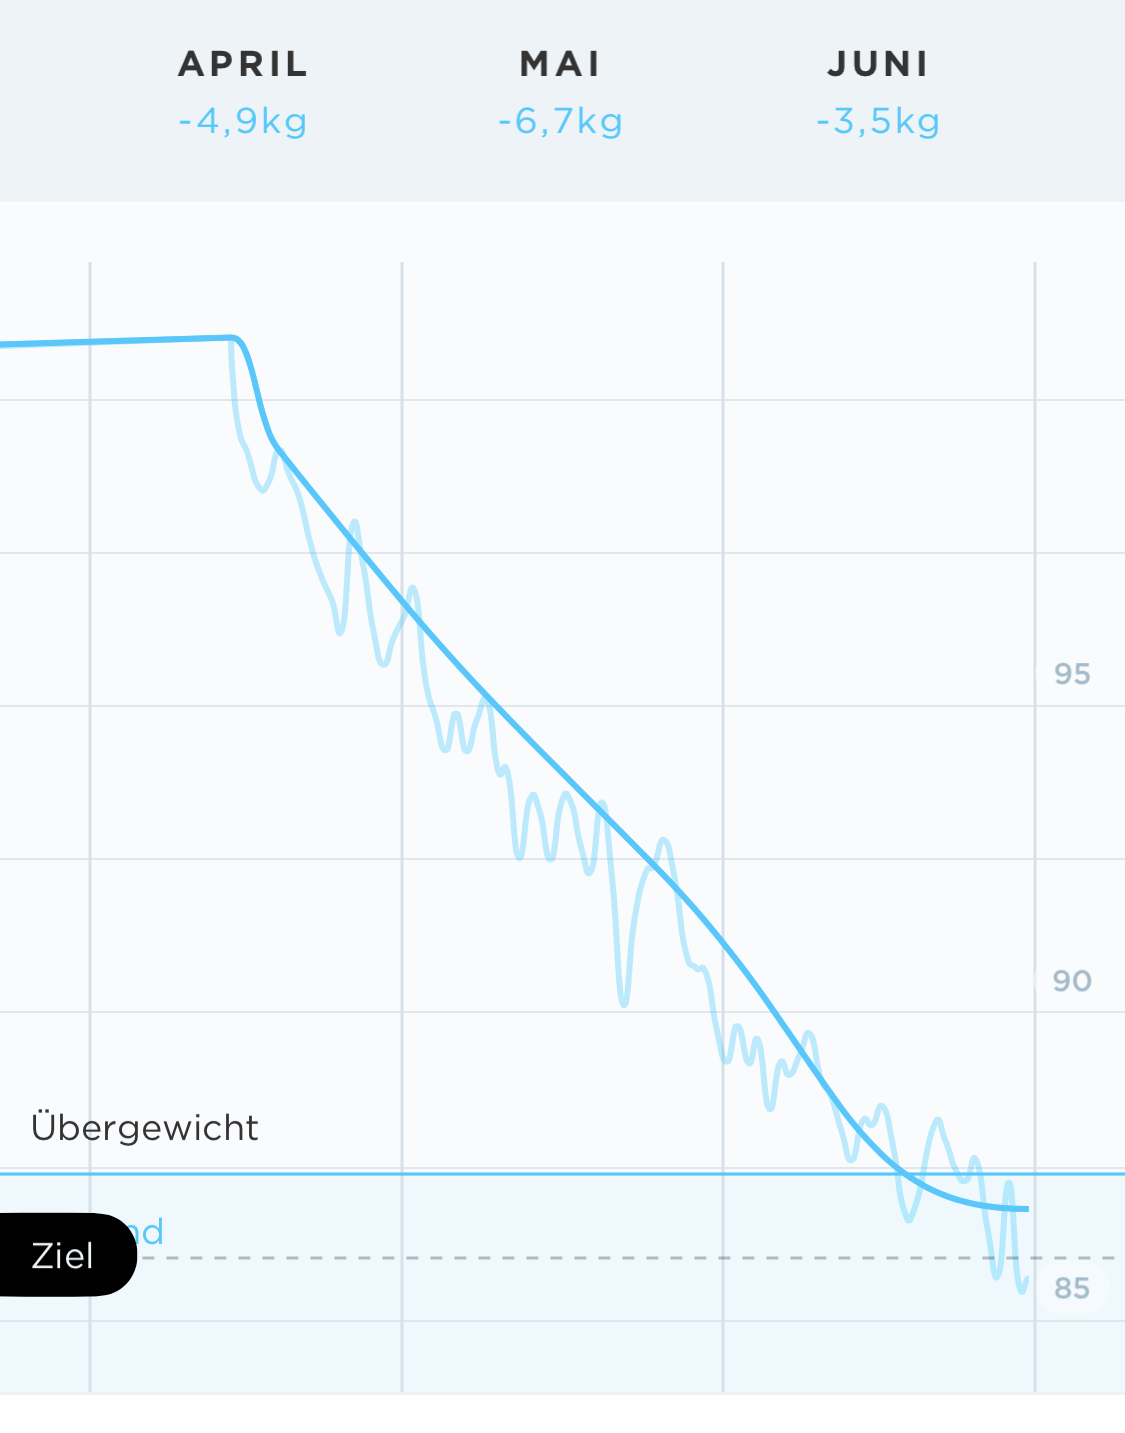 Weight loss graph